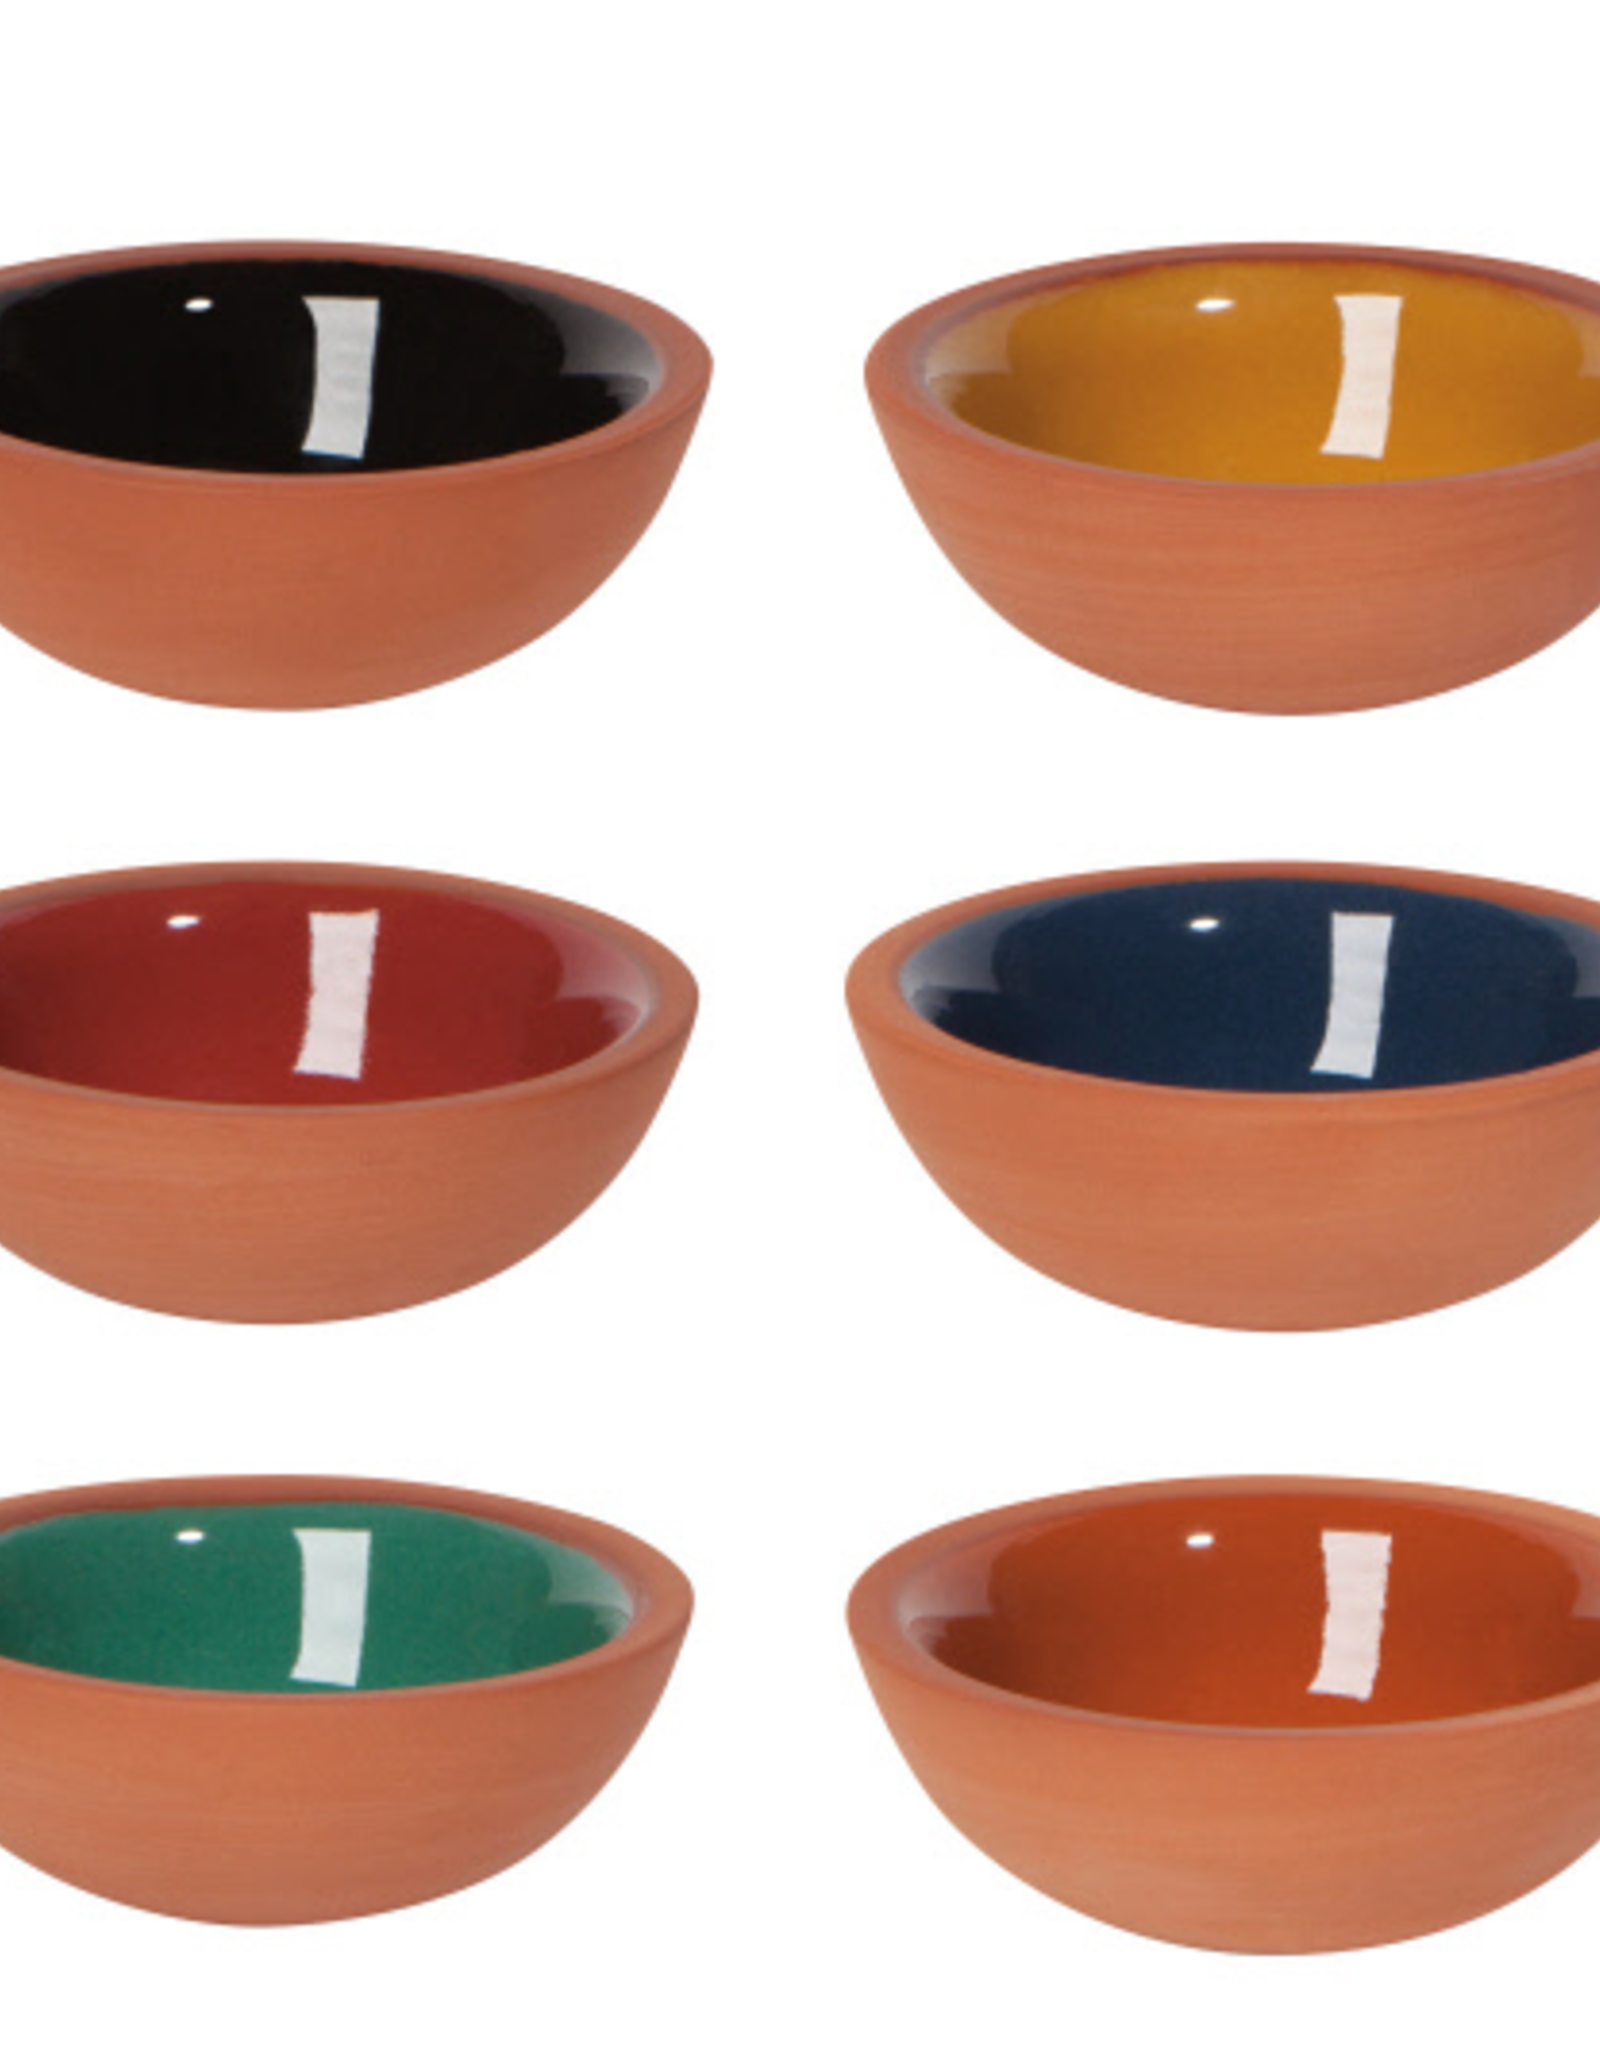 Danica + Now Designs Pinch Bowl - Terracotta Set (of 6)